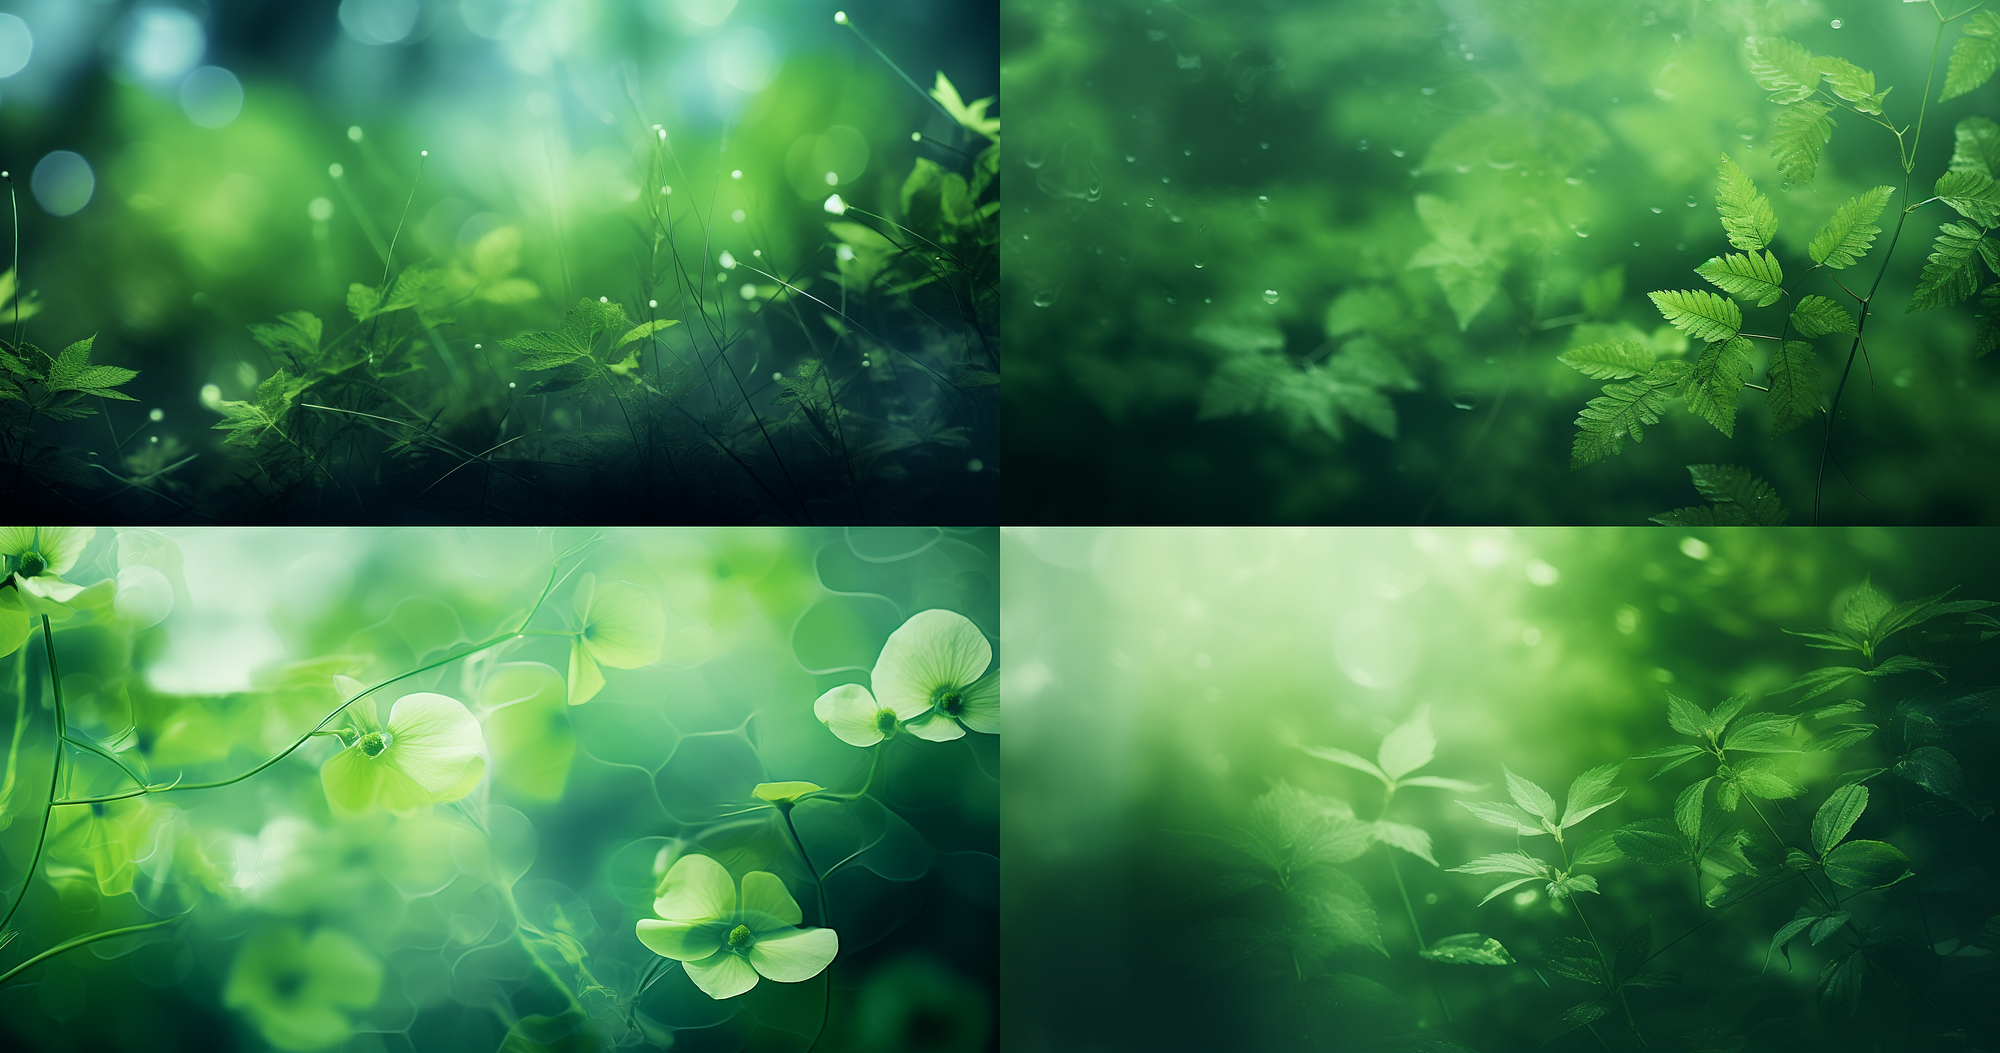 Nature green blurred background.